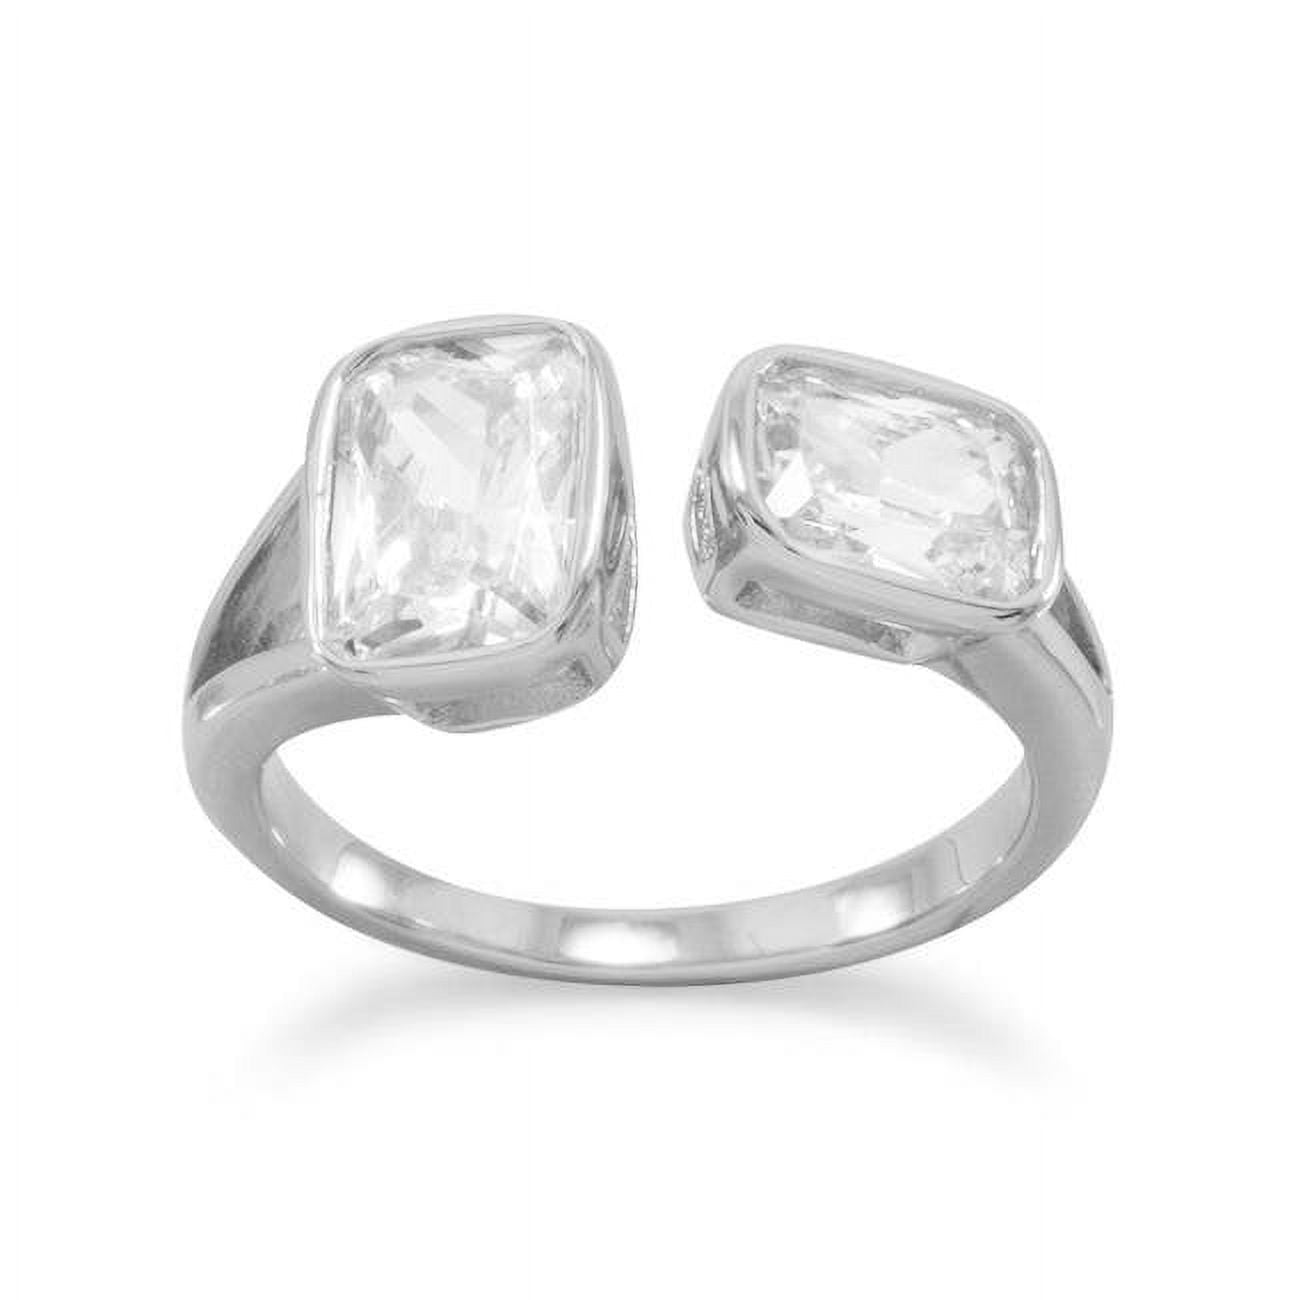 83700-7 Sterling Silver Geometric Cubic Zirconia Split Design Ring - Size 7